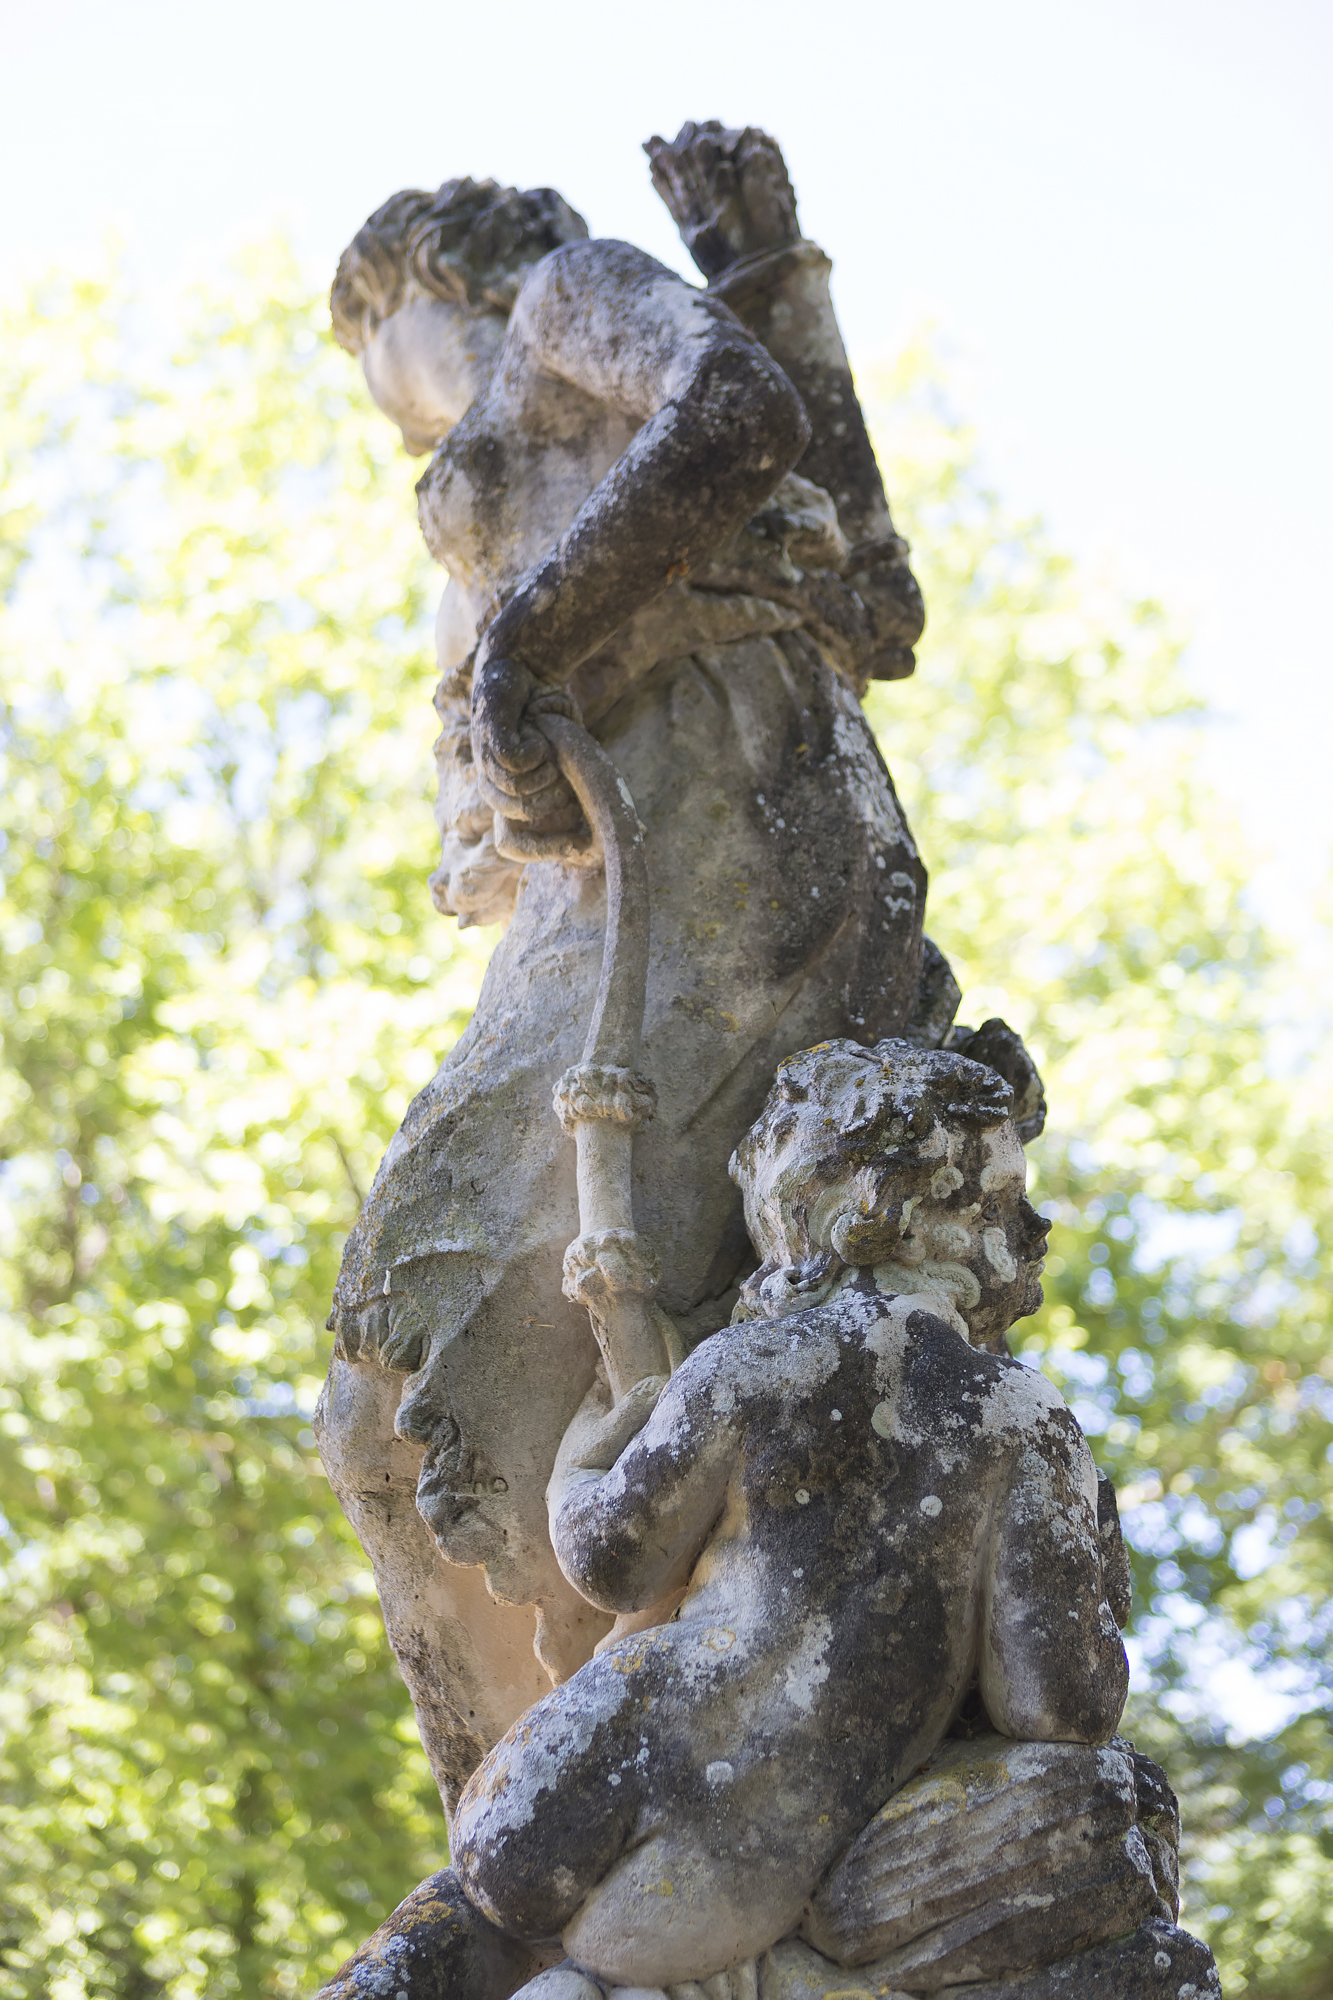 A statue in Engerran Gardens